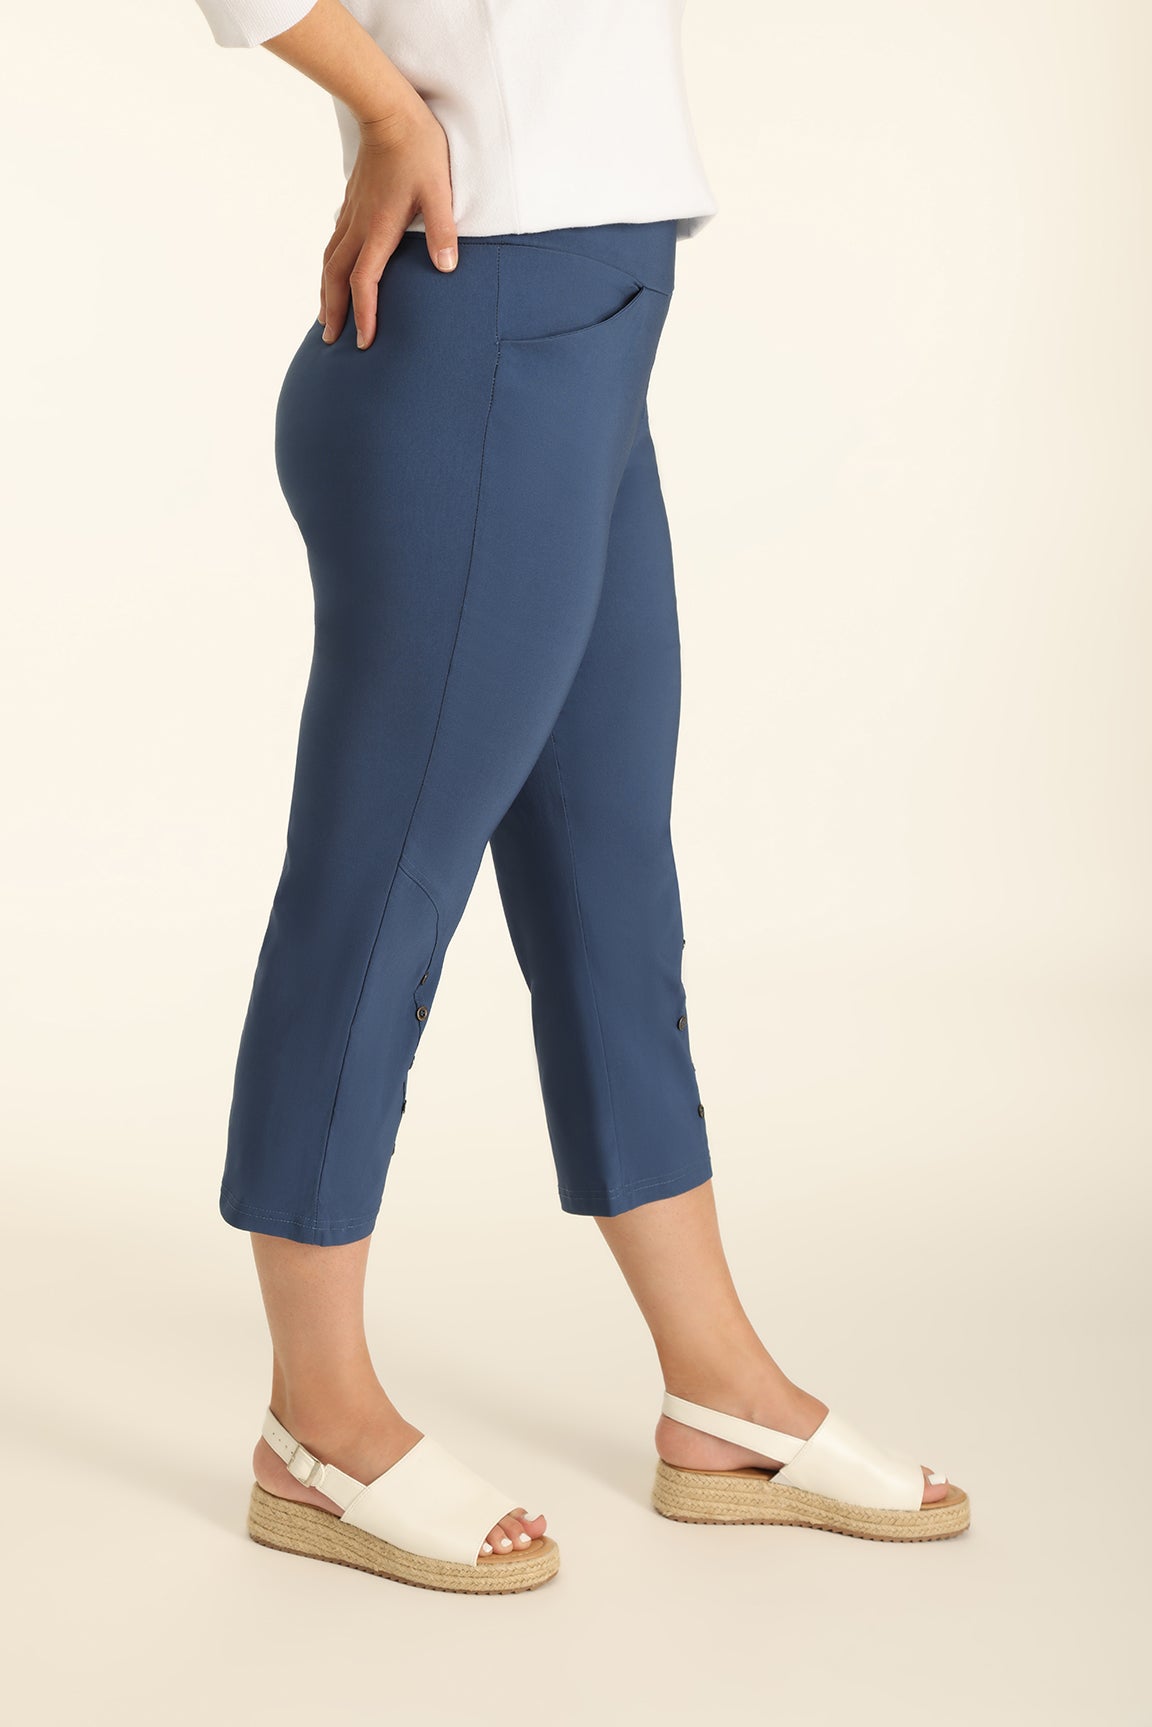 rangita Women 100% Cotton Black Solid Calf Length Straight Pant, S :  Amazon.in: Fashion